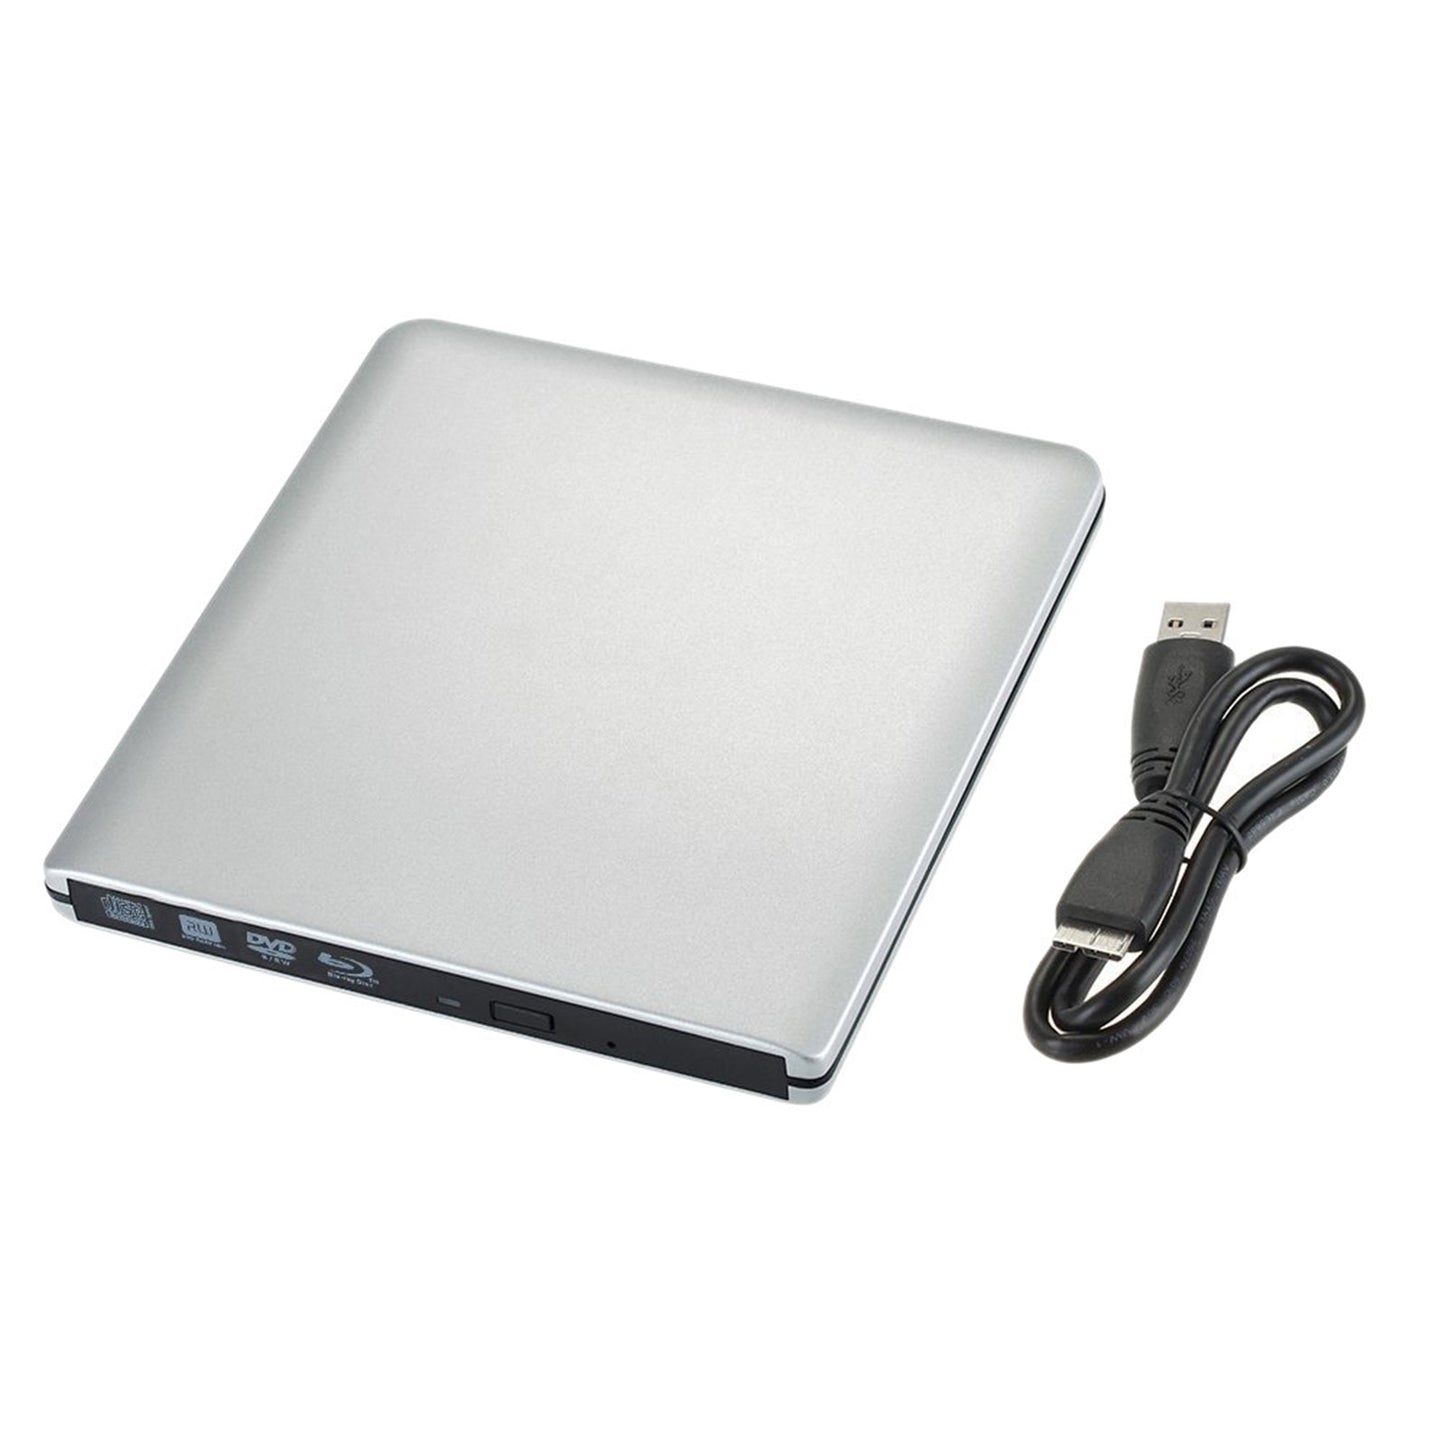 Genuine Bluray Burner External USB 3.0 Player DVD CD BD Recorder Drive Silver